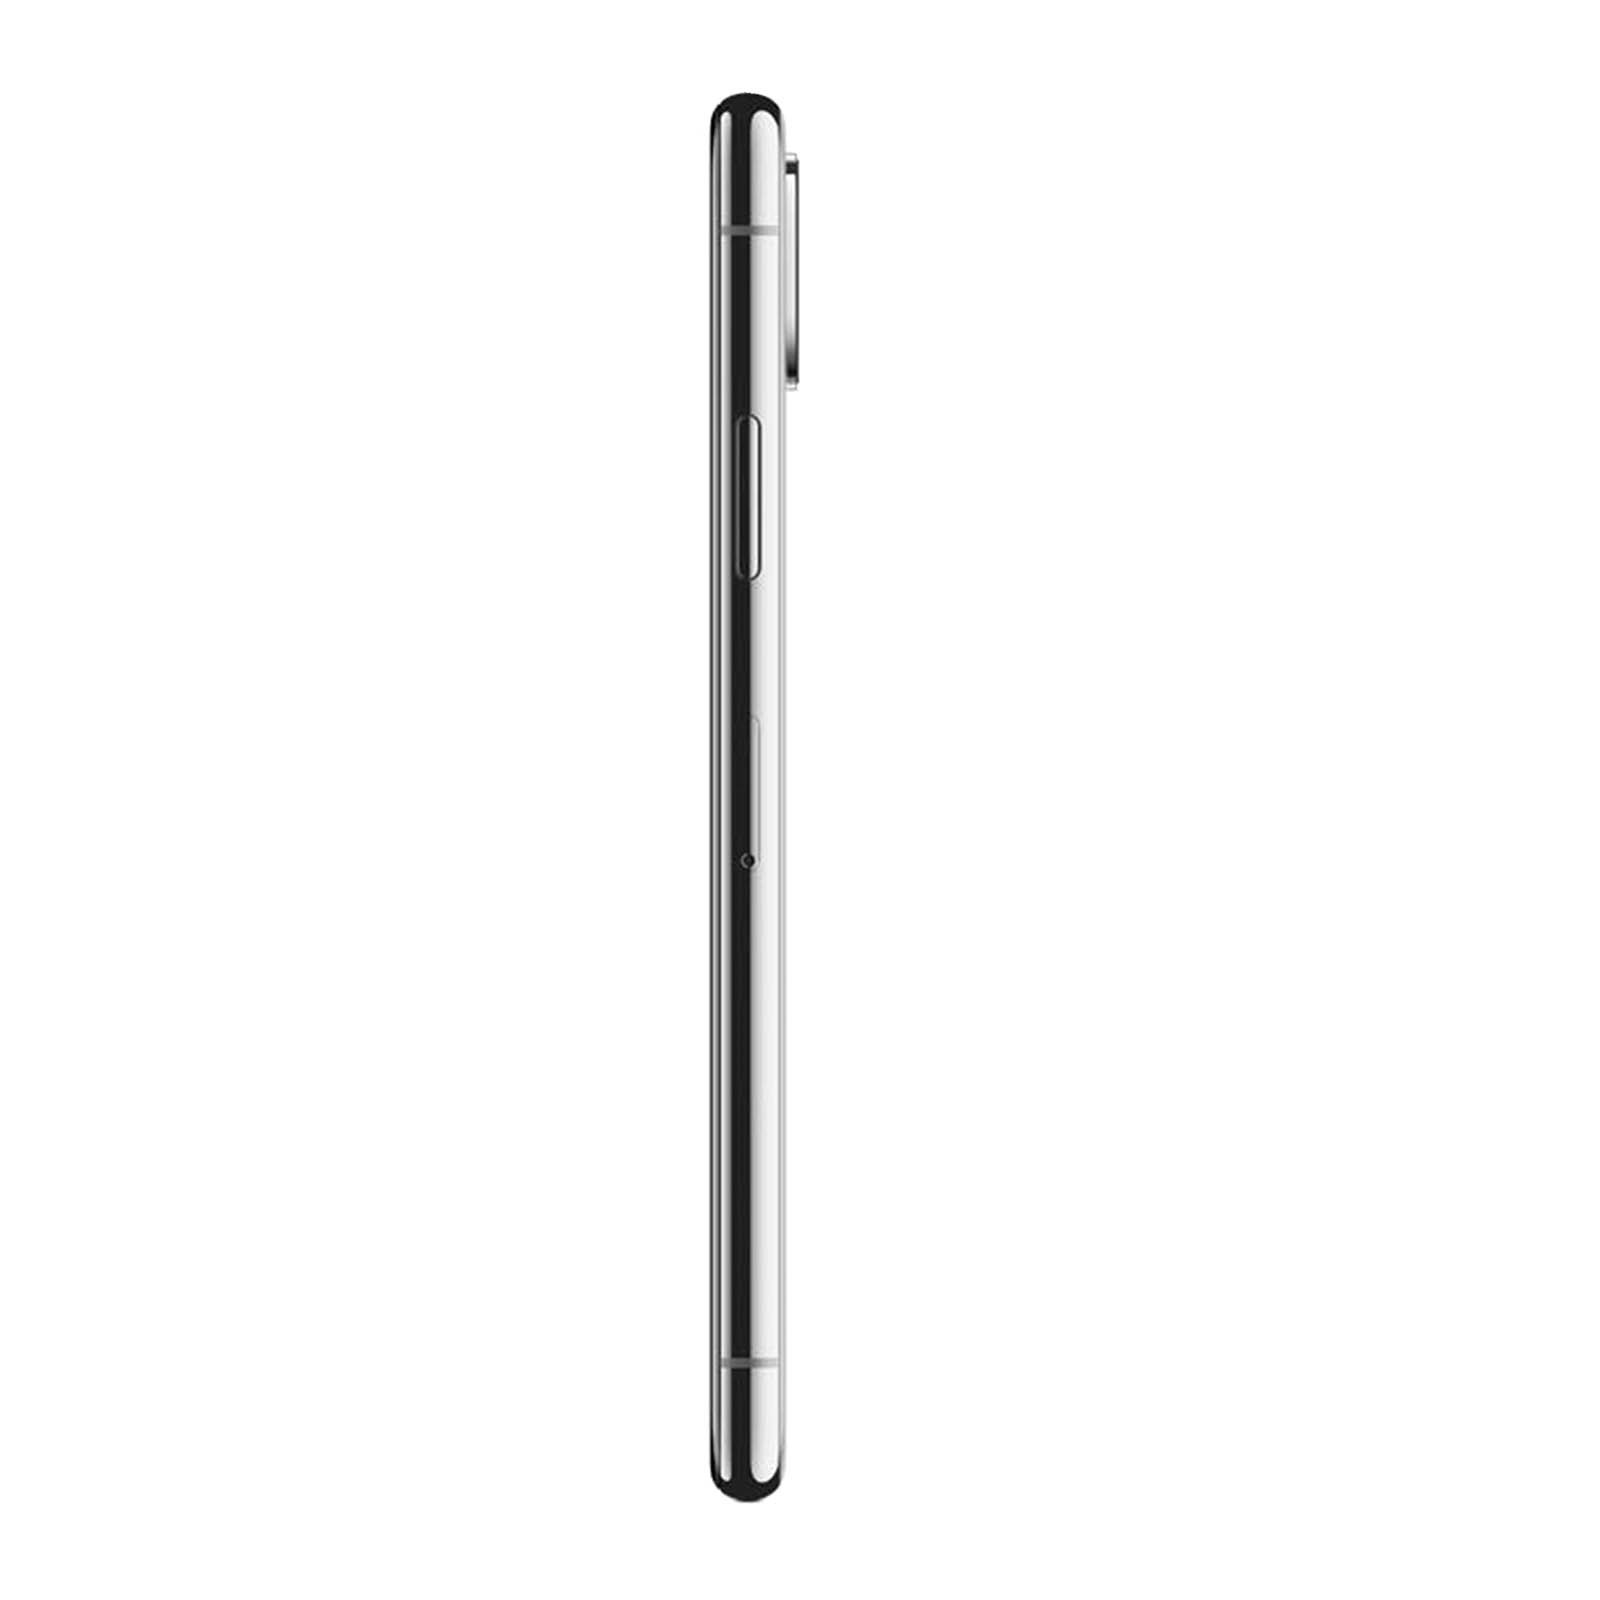 Apple iPhone XS 256GB Space Grey Pristine - Unlocked